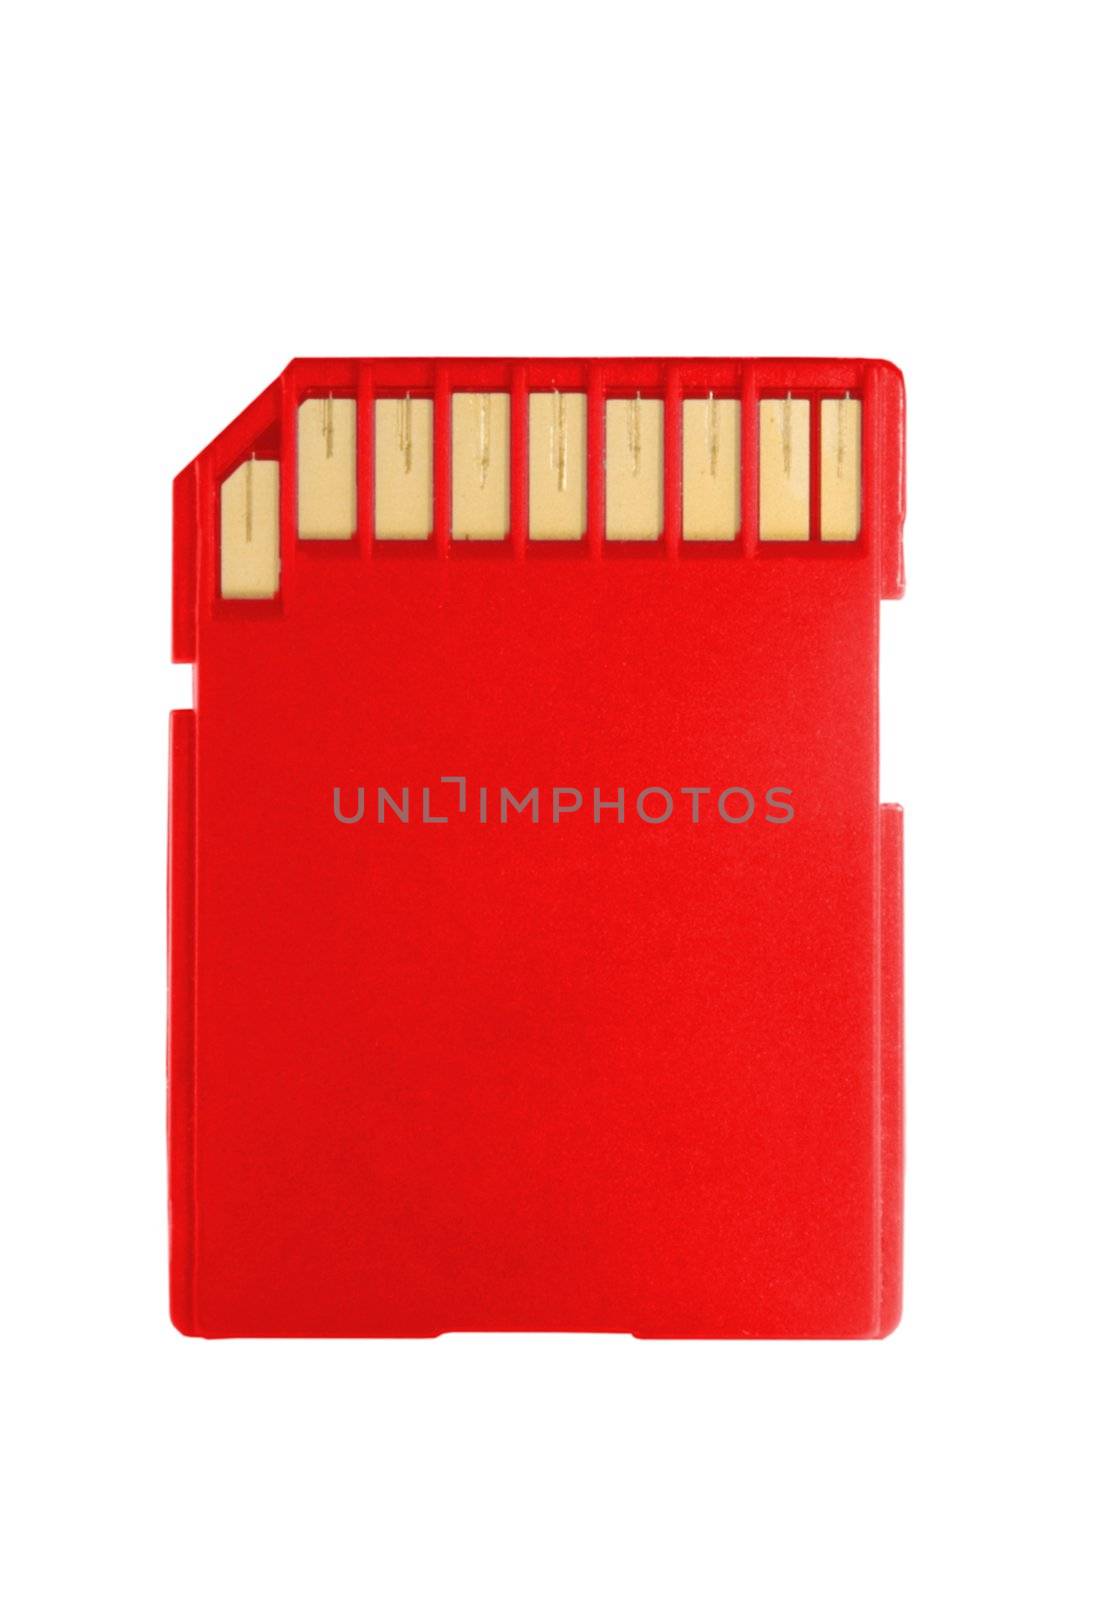 color memory sd card data storage device for cameras, portable sound by Trebuchet